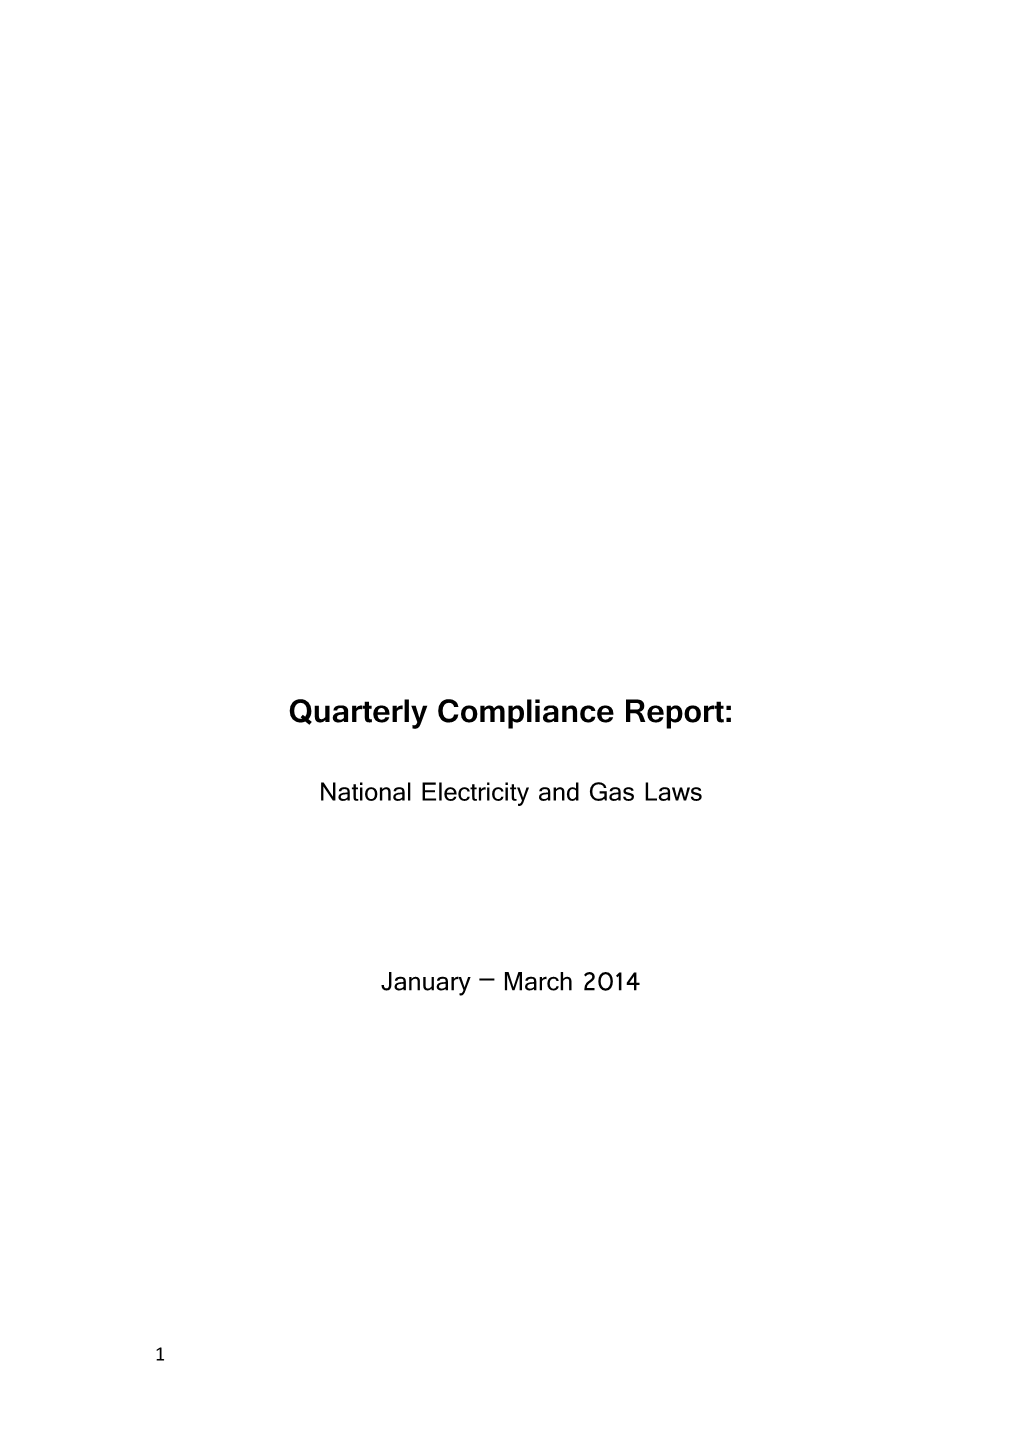 Quarterly Compliance Report - June 2013